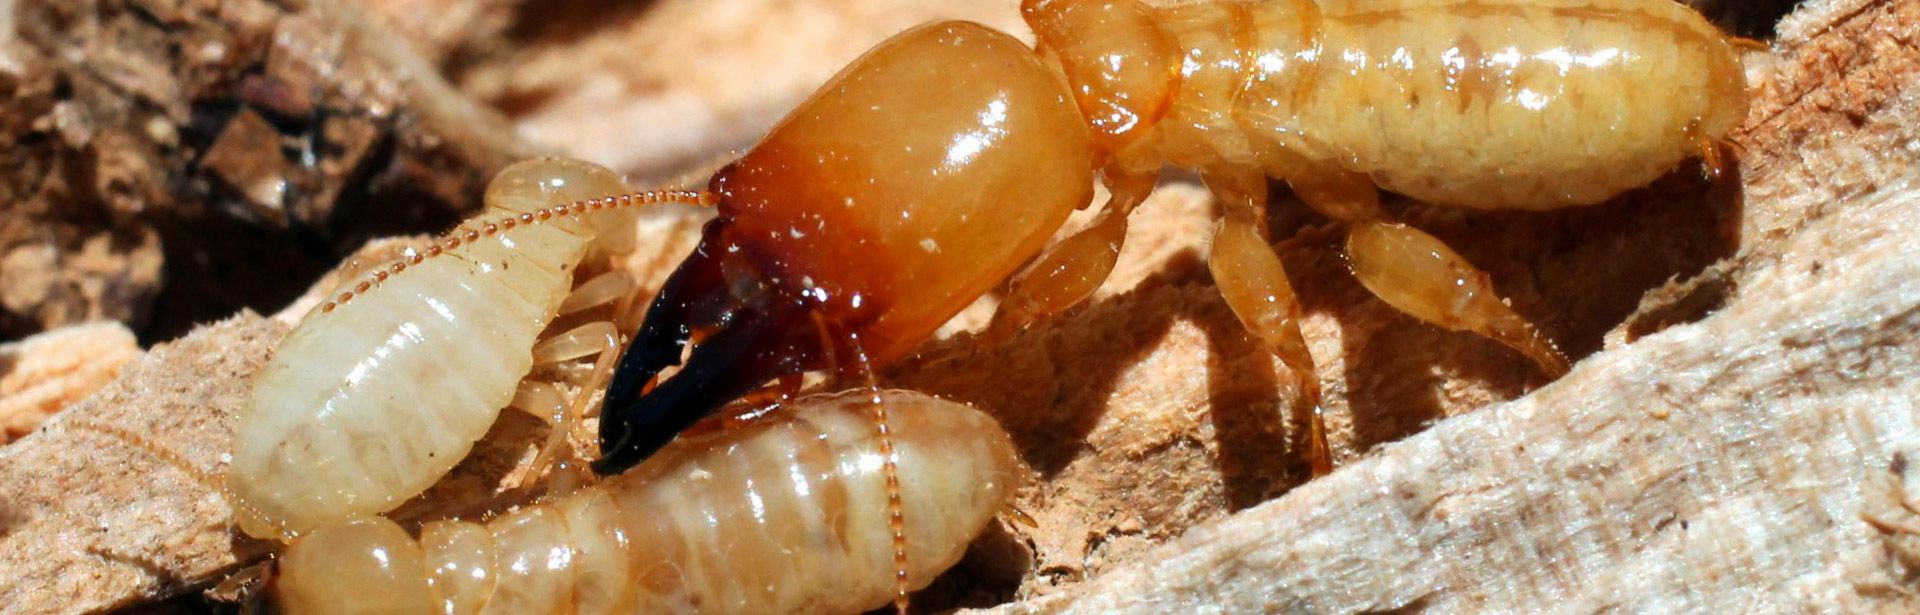 image-bandeau-interne-termites